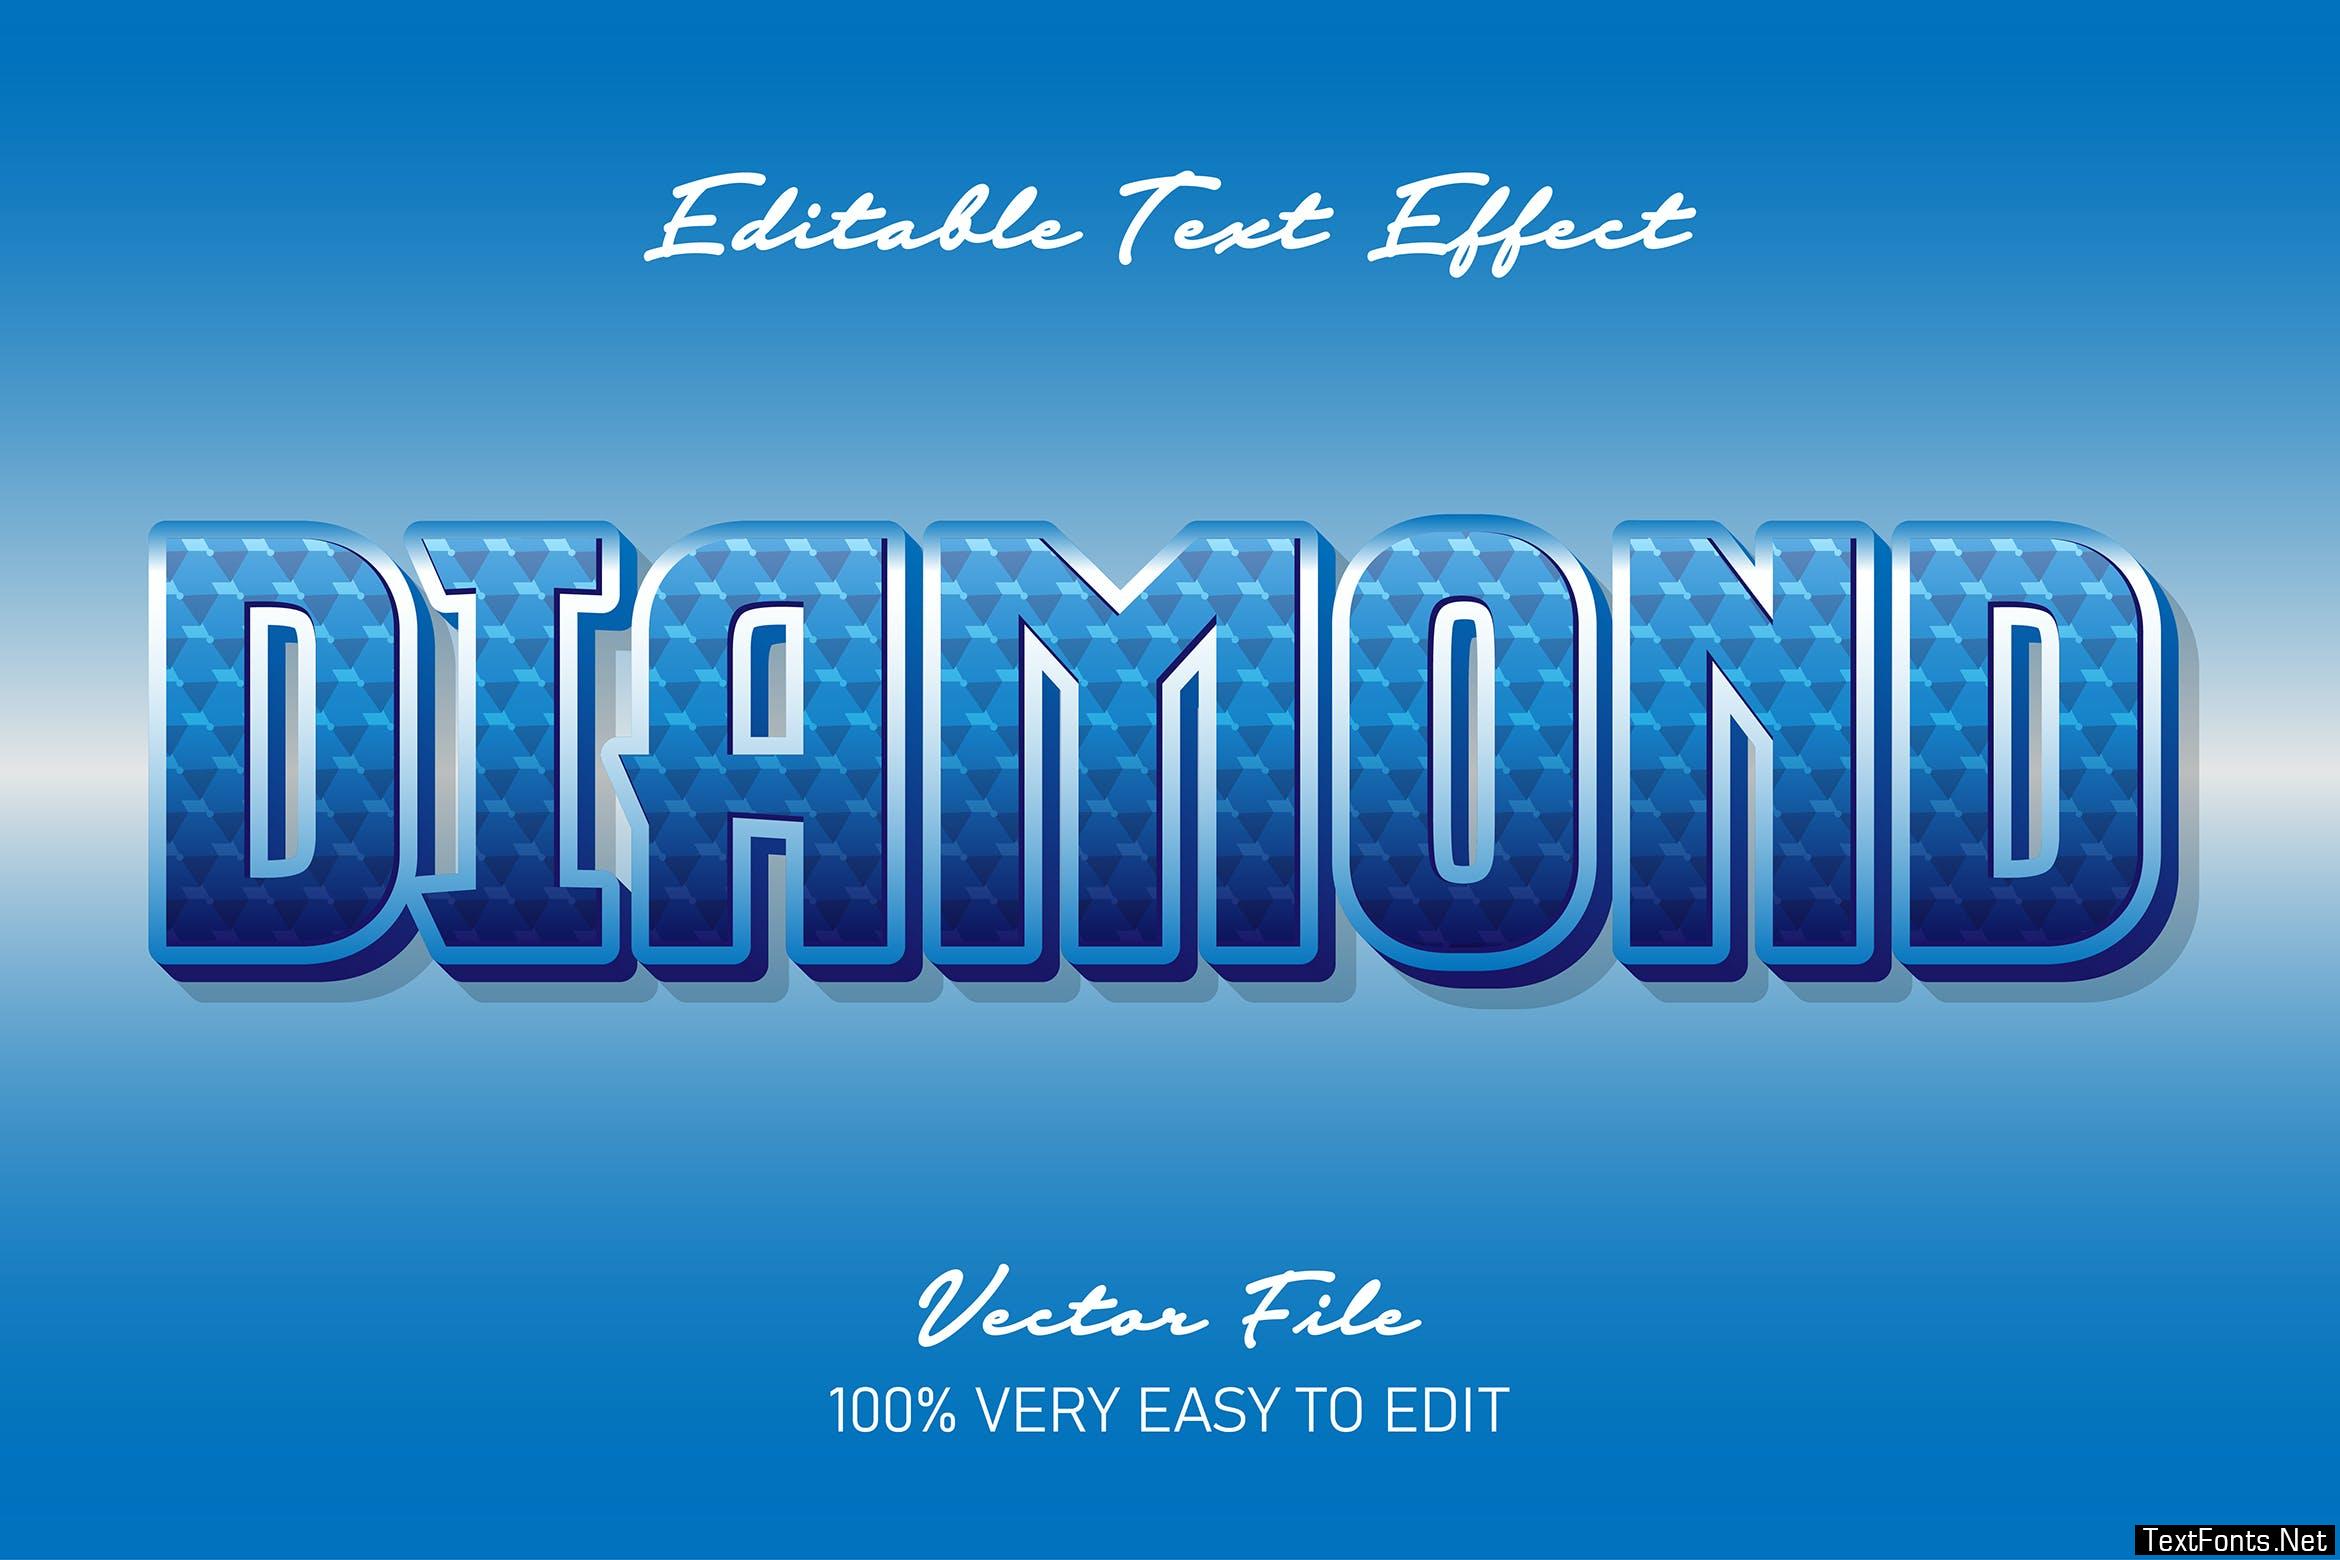 Blue diamond text effect